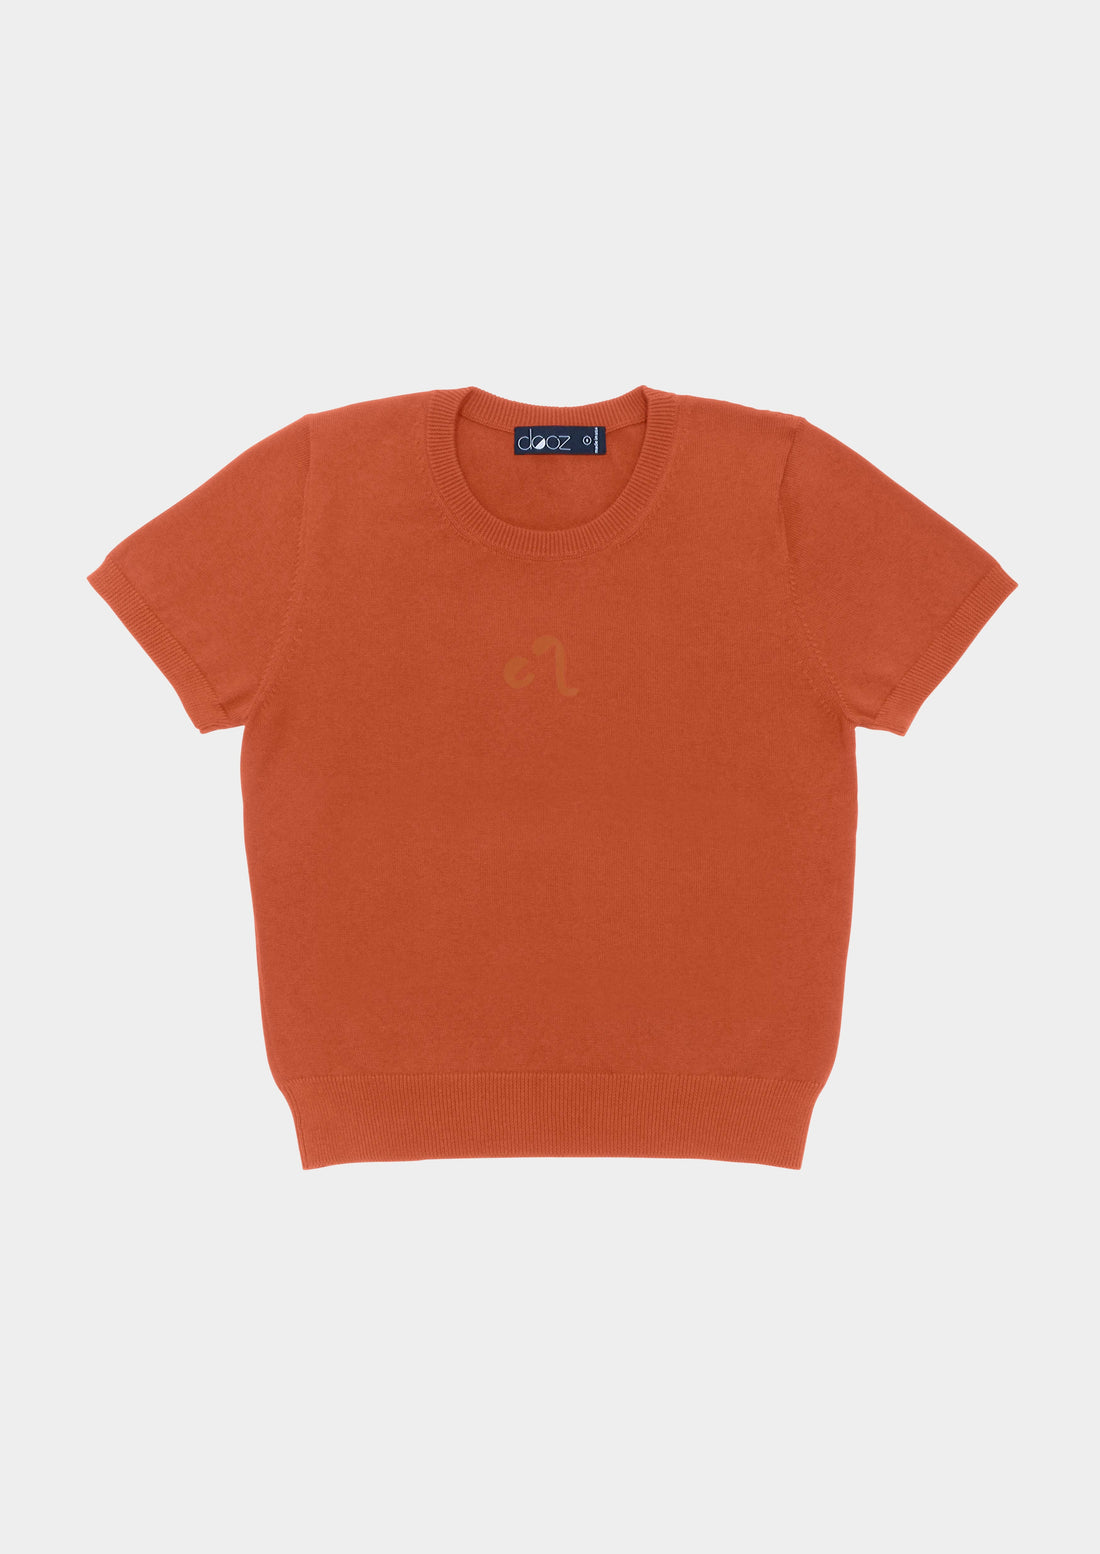 Dooz Leo orange cotton knit short sleeve sweater tee with flocked zodiac glyph